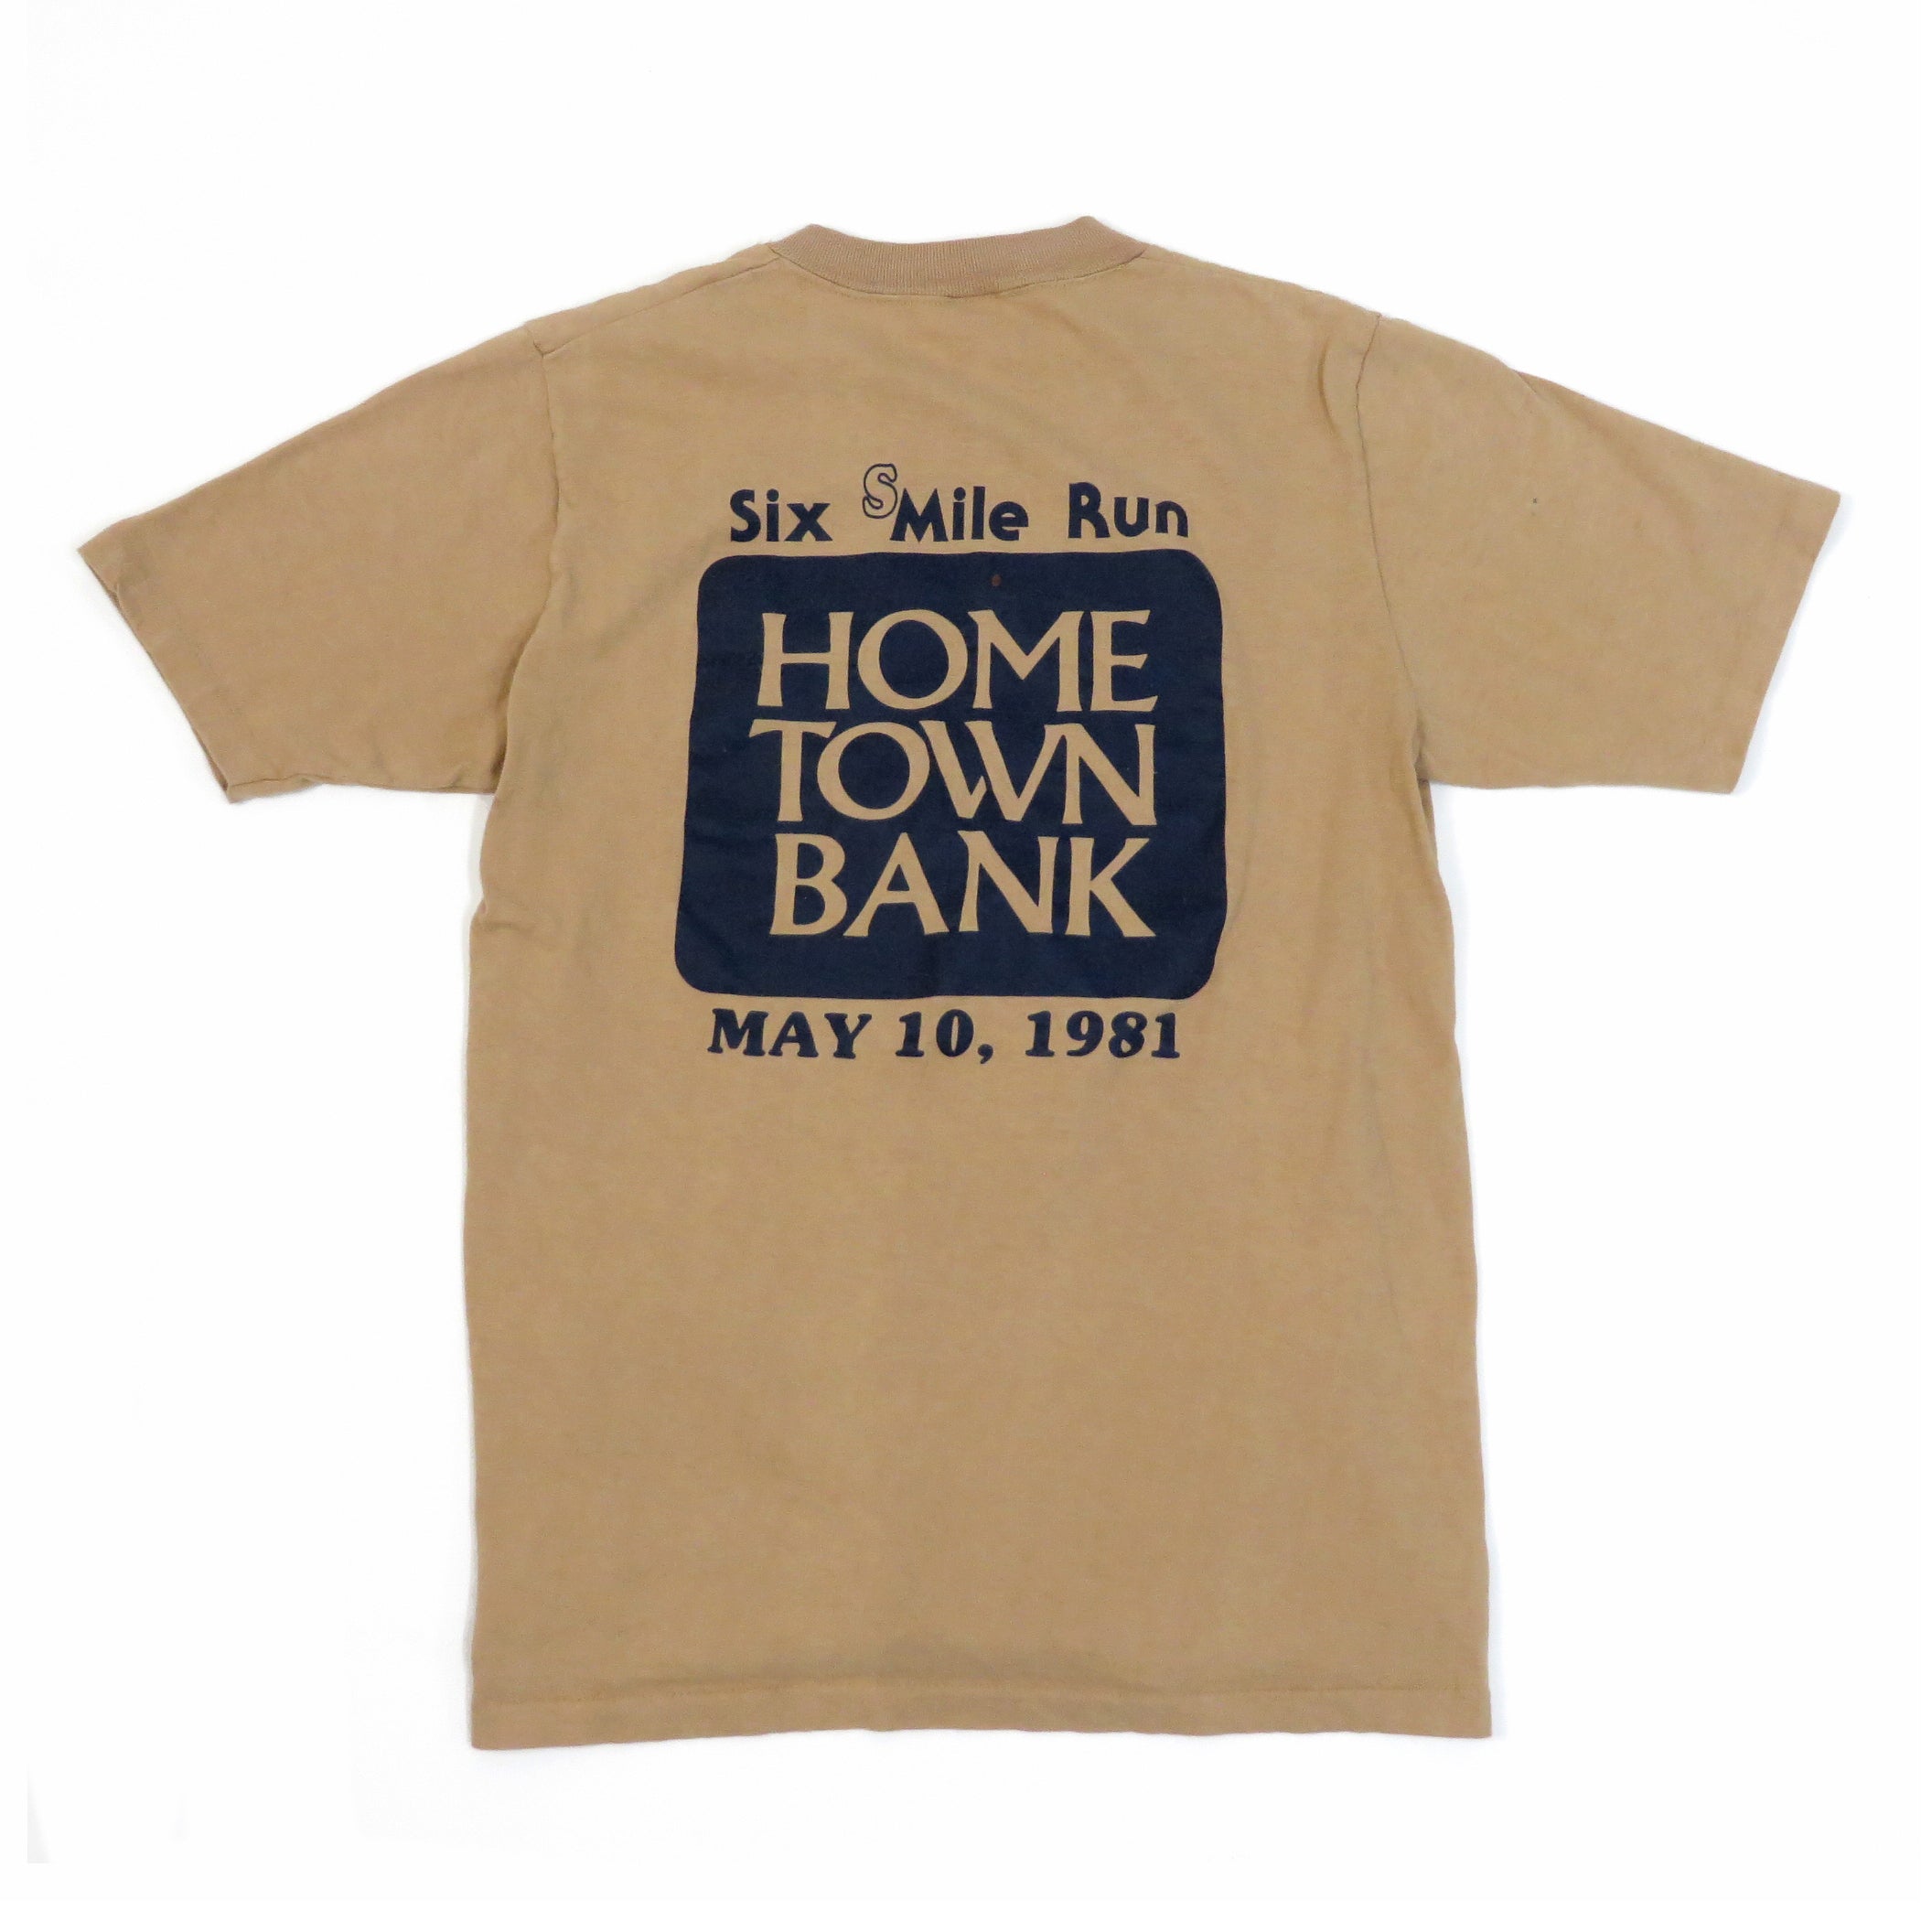 Vintage 1981 New Balance Six Mile Run T-Shirt Sz M